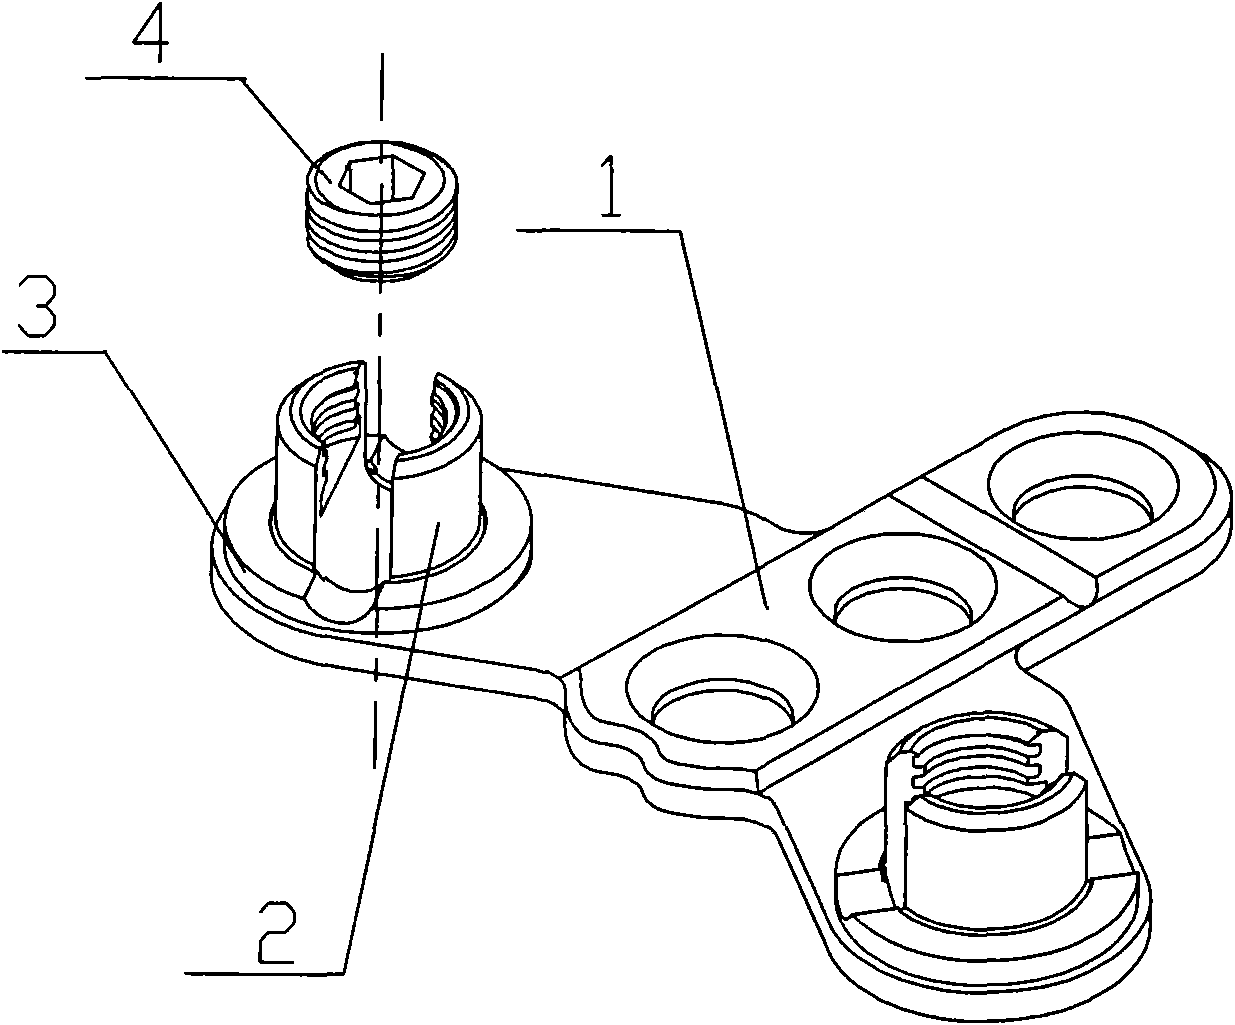 Occipital screw rod connector